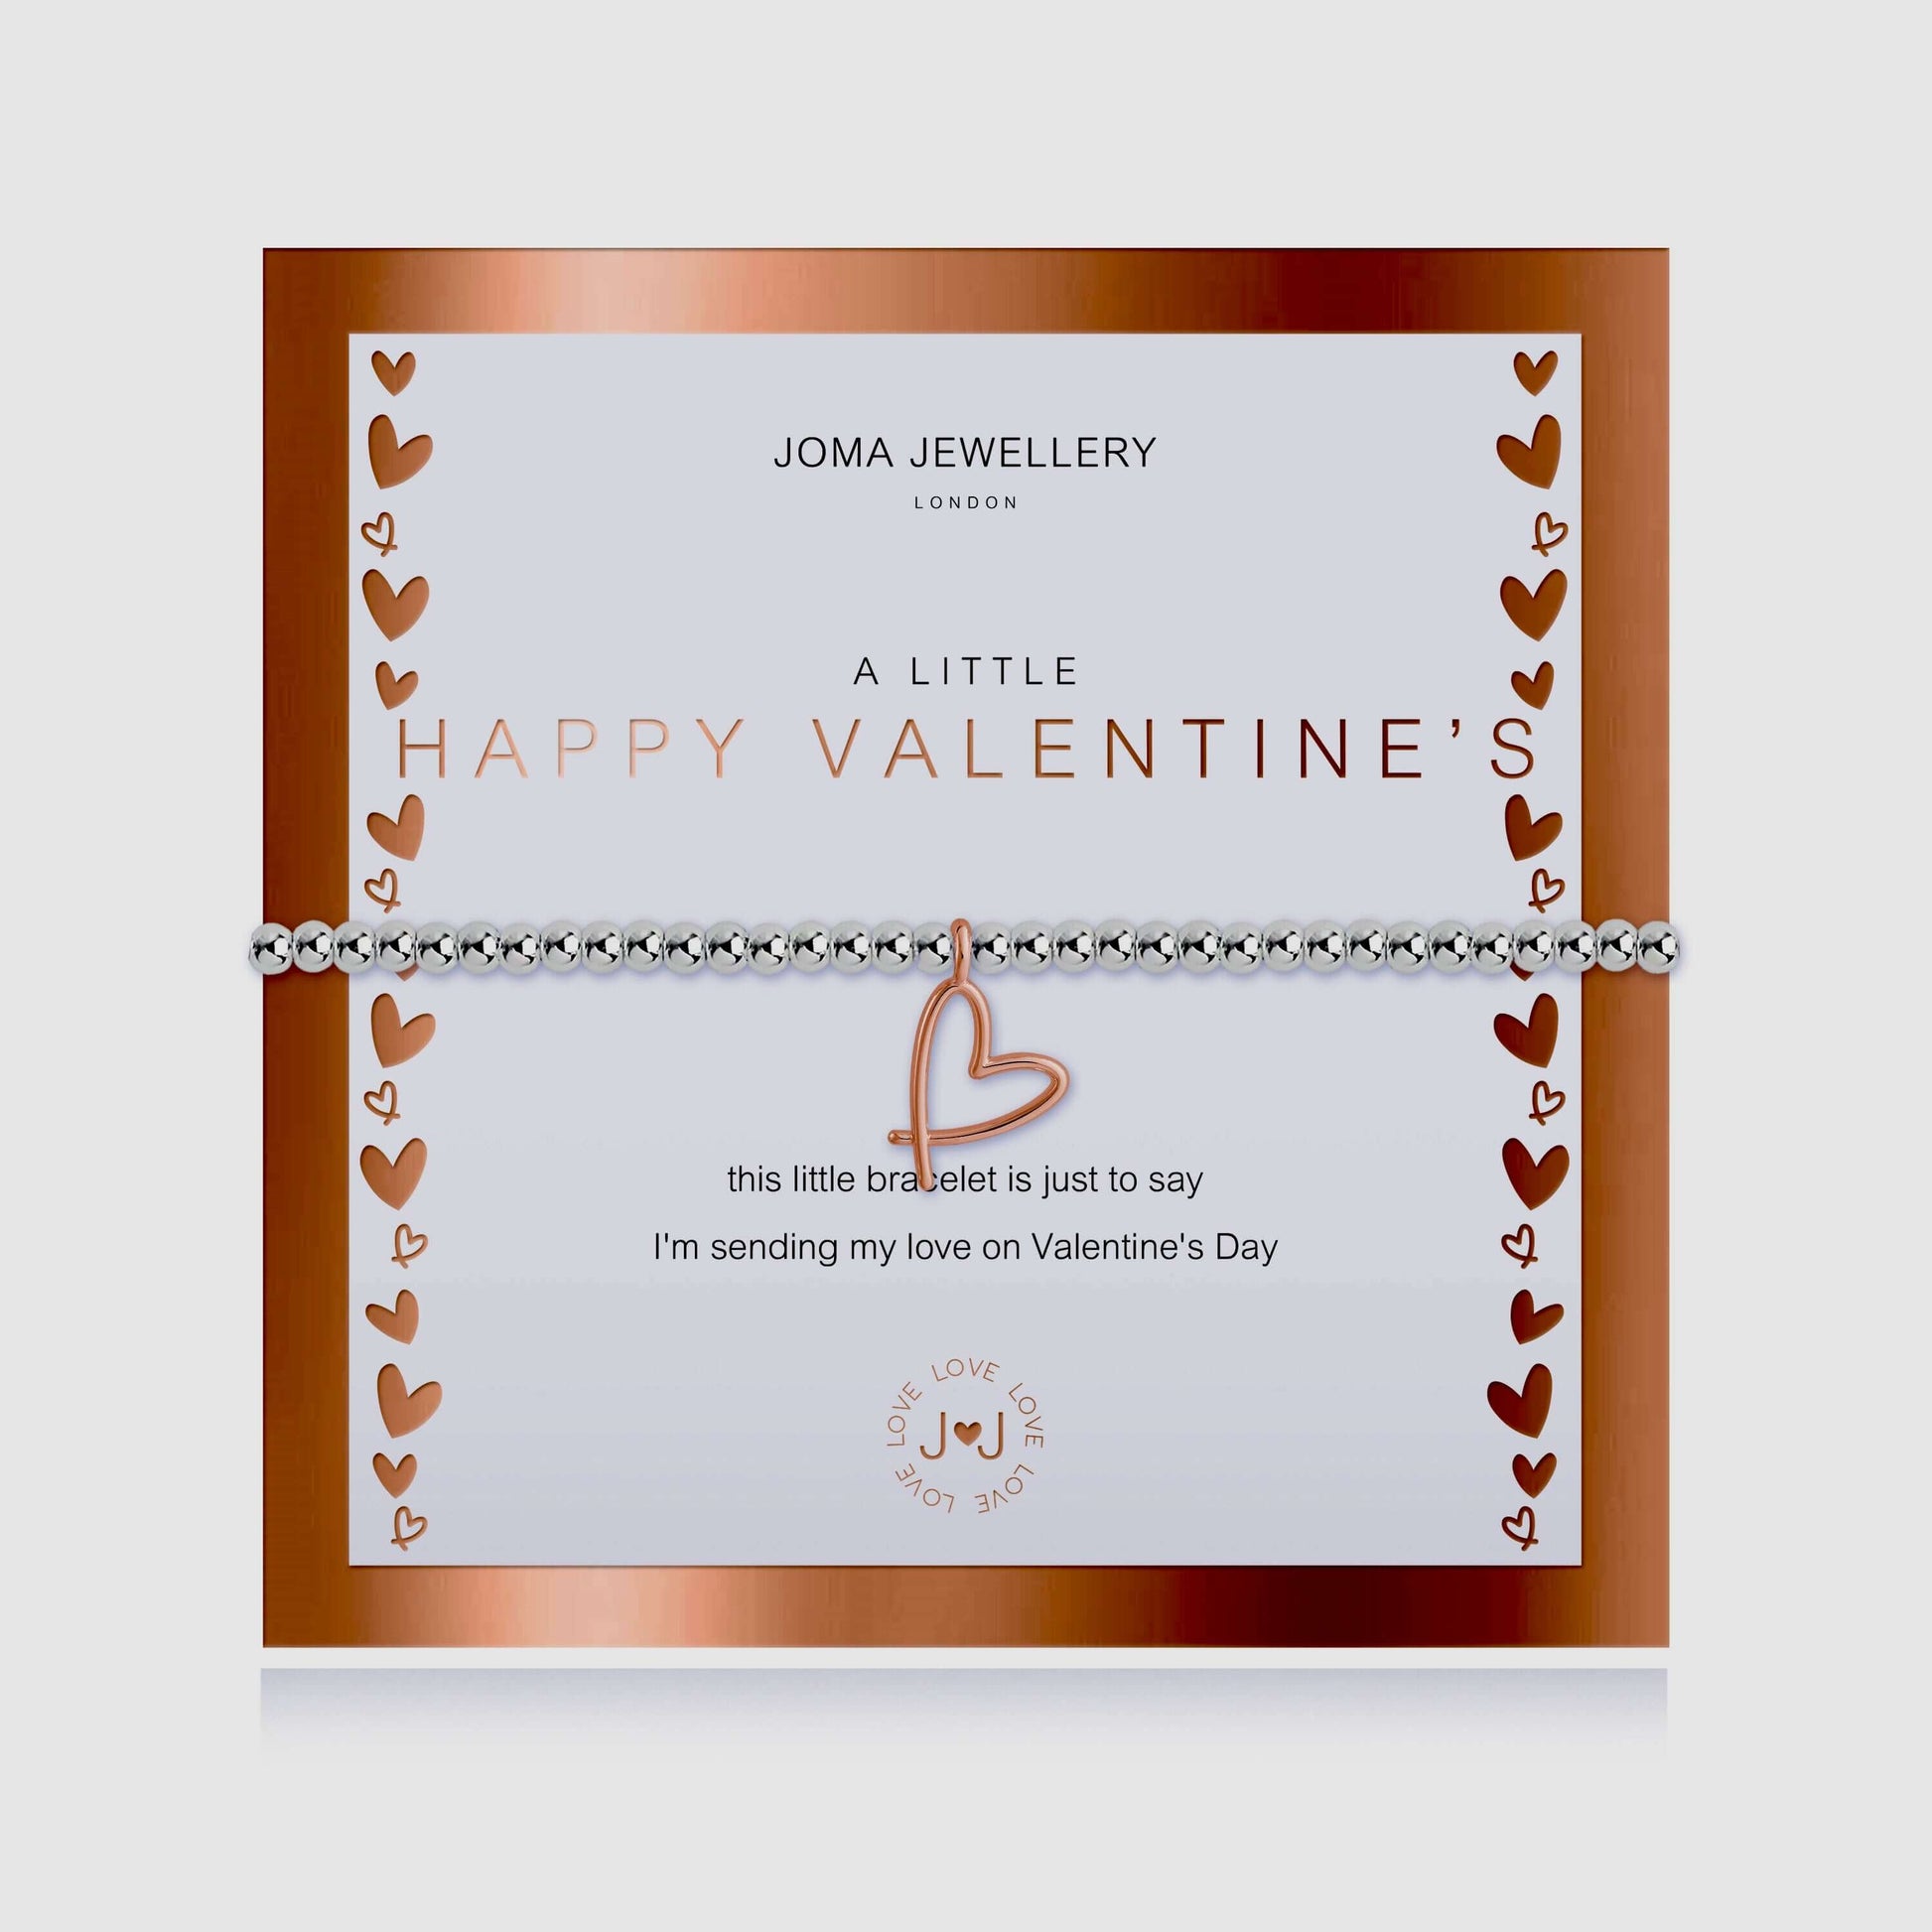 Joma Jewellery 'A Little Happy Valentine's' Bracelet